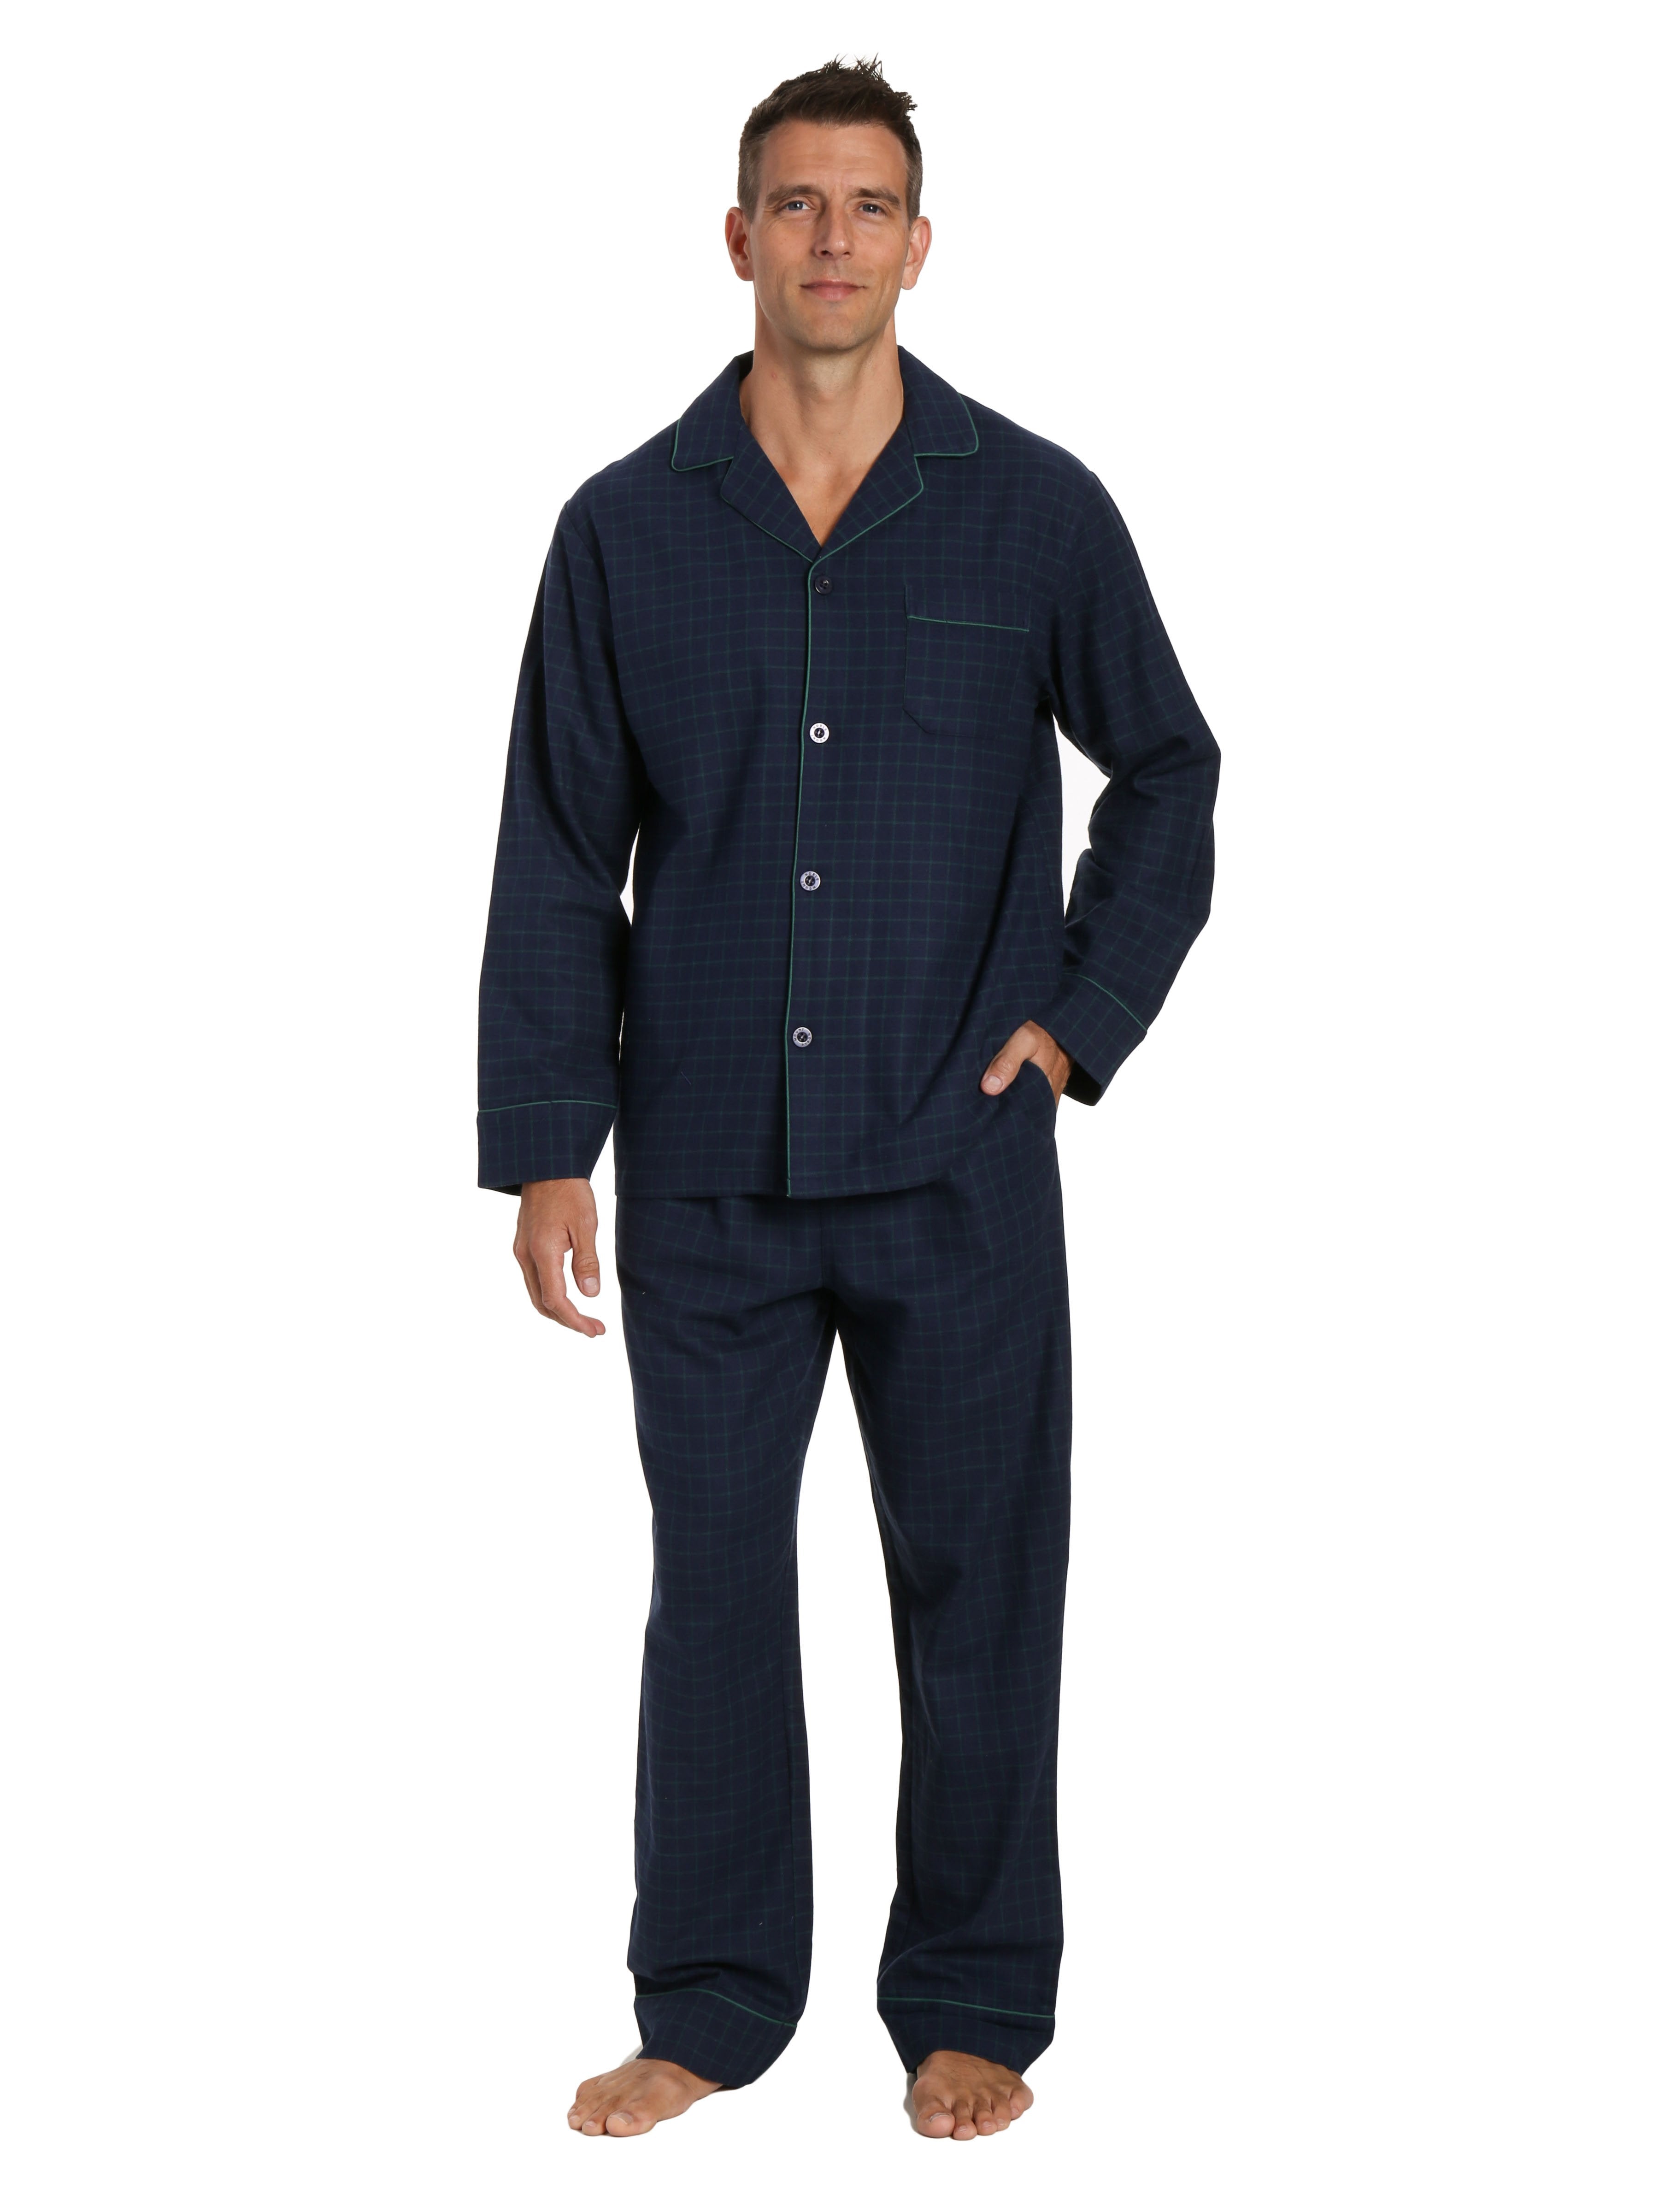 Box Packaged Men's Premium 100% Cotton Flannel Pajama Sleepwear Set - Windowpane Checks - Navy Green